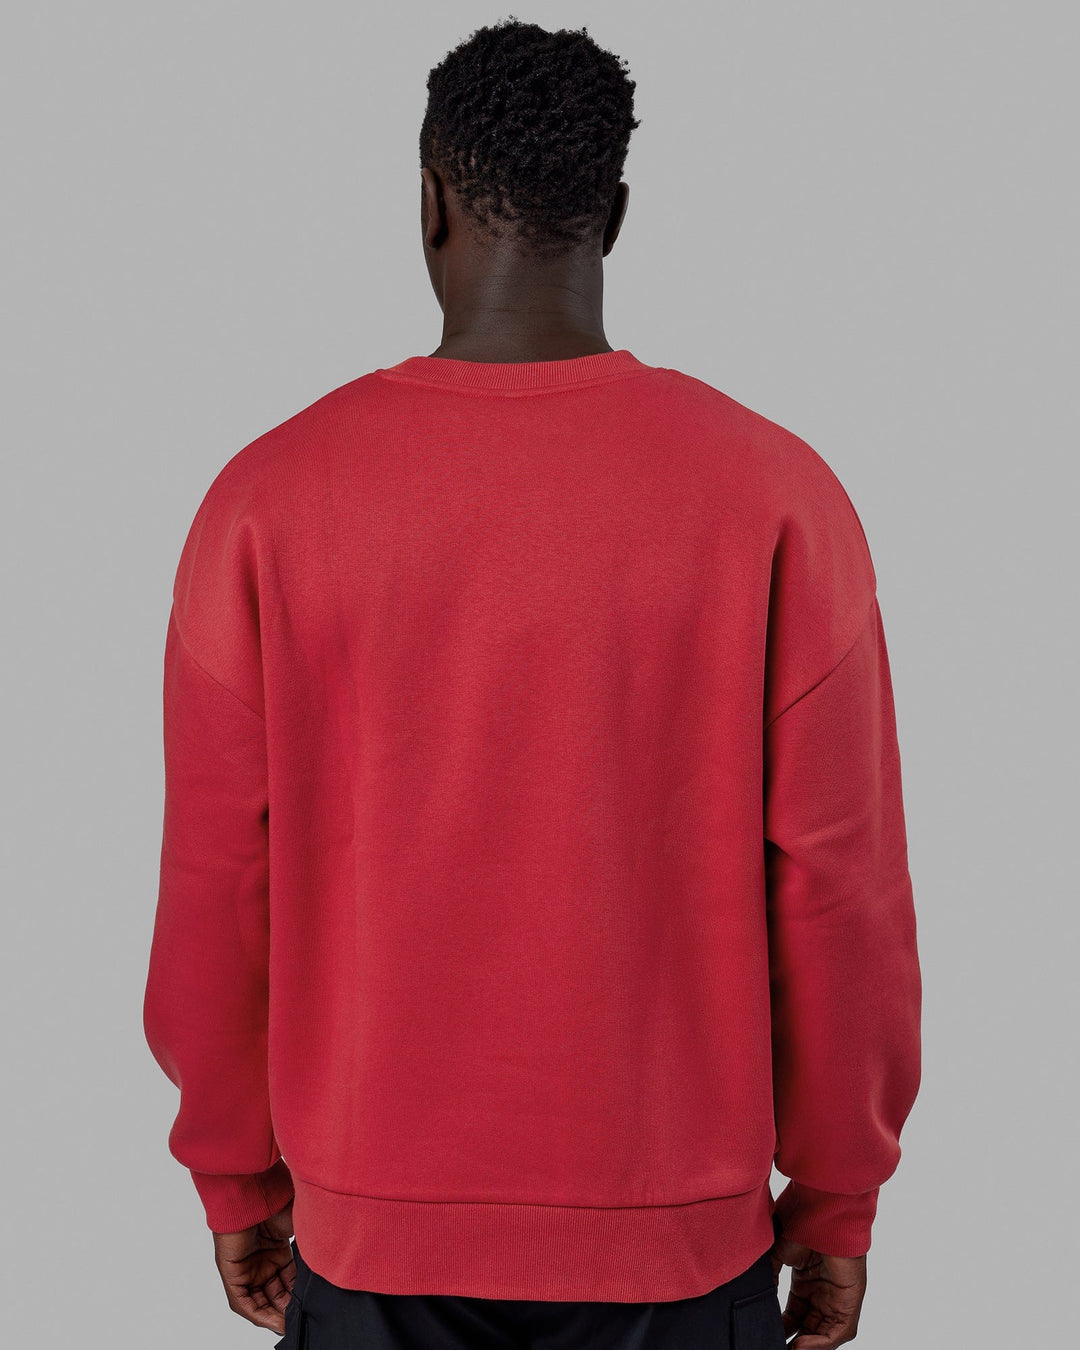 Man wearing Unisex 1% Better Sweater Oversize - Cardinal